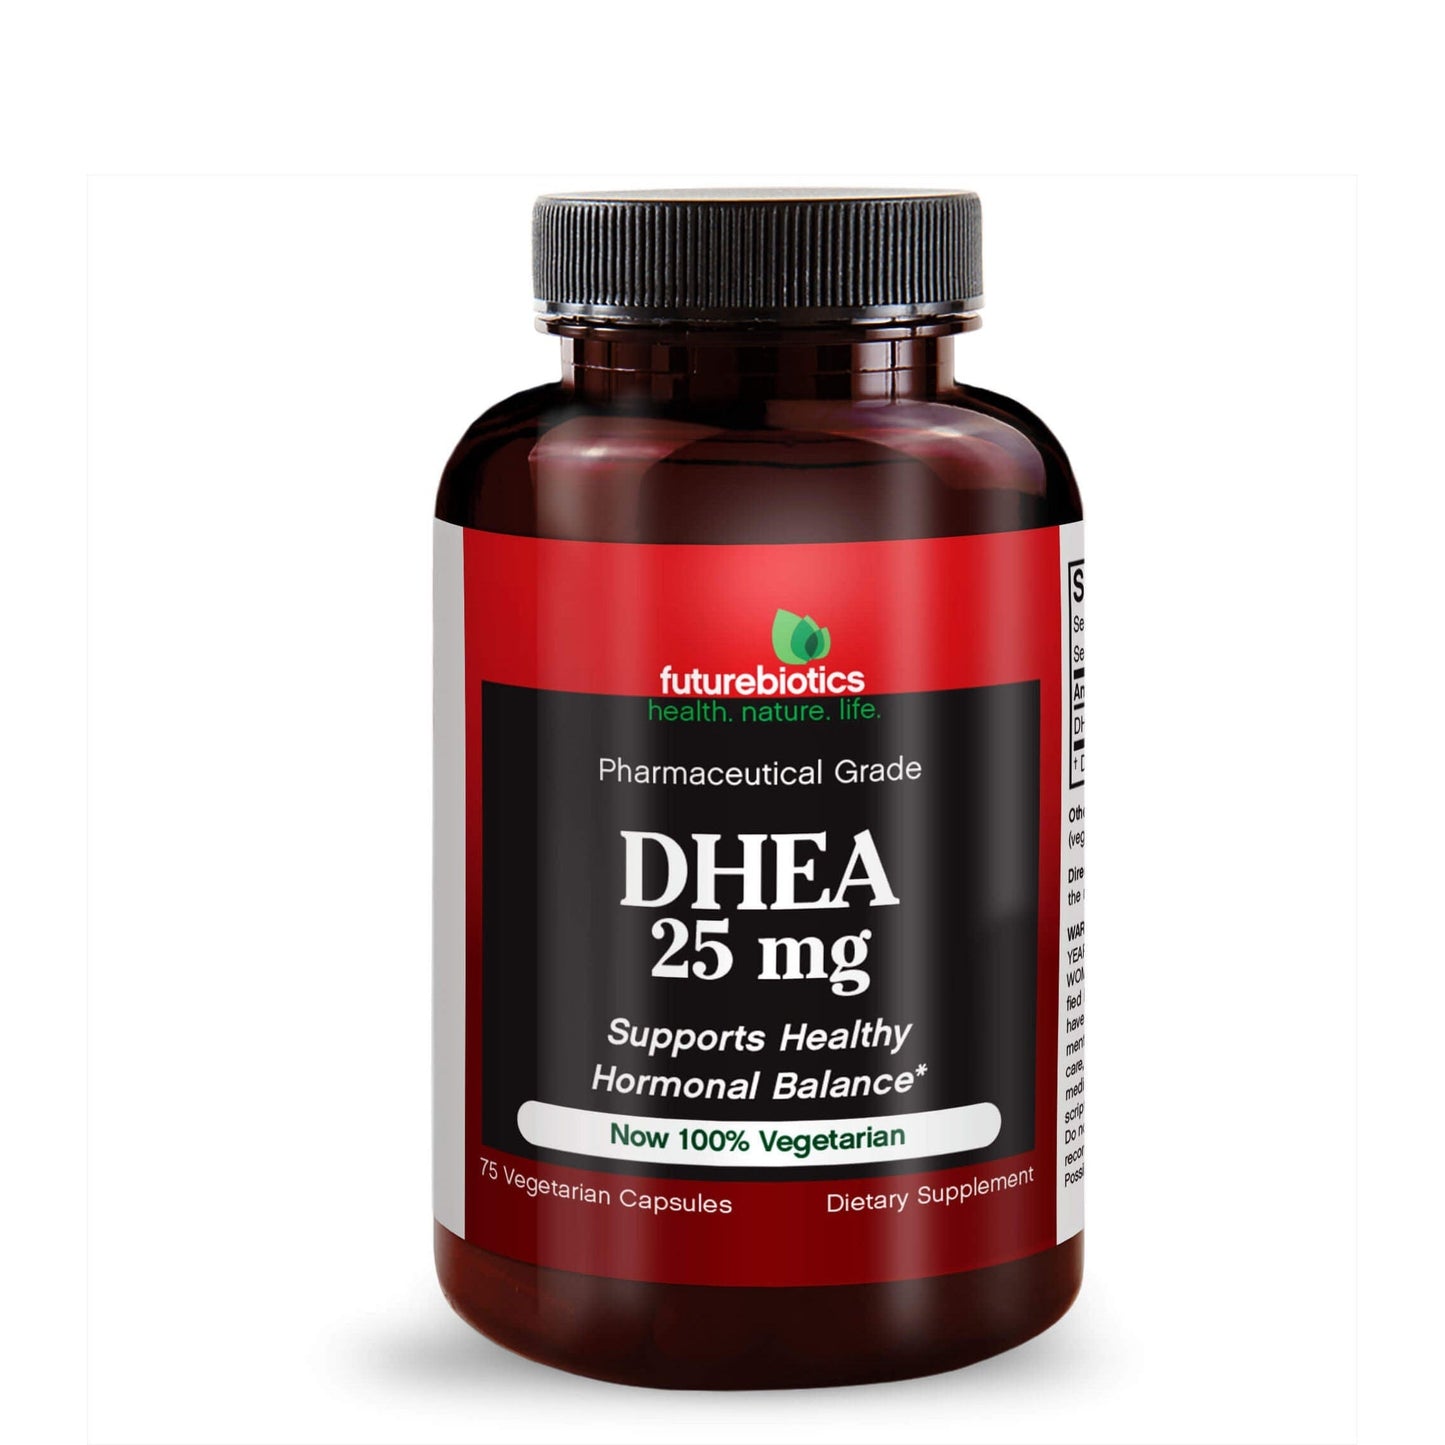 Futurebiotics DHEA Supplements 25 mg, 75 Capsules